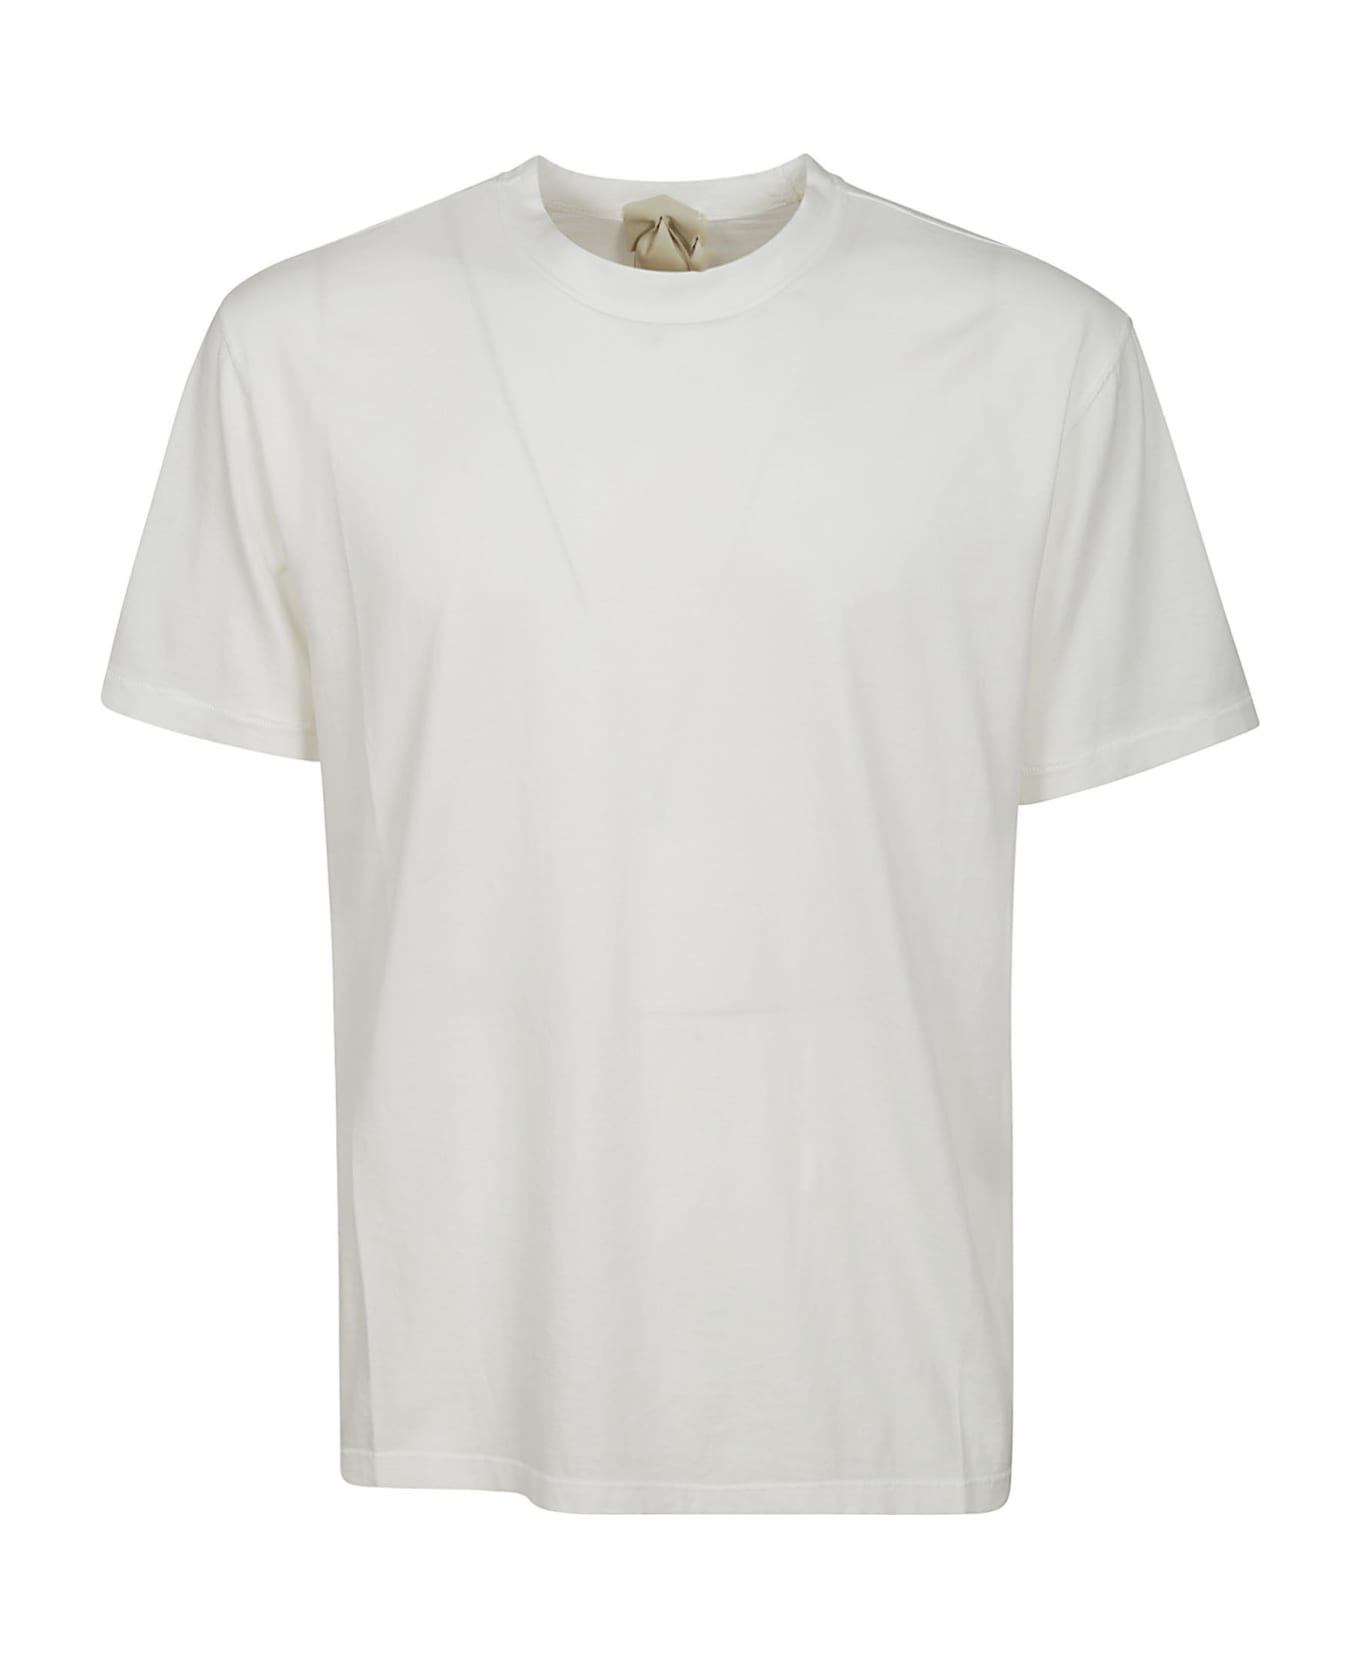 Ten C Tshirt - White